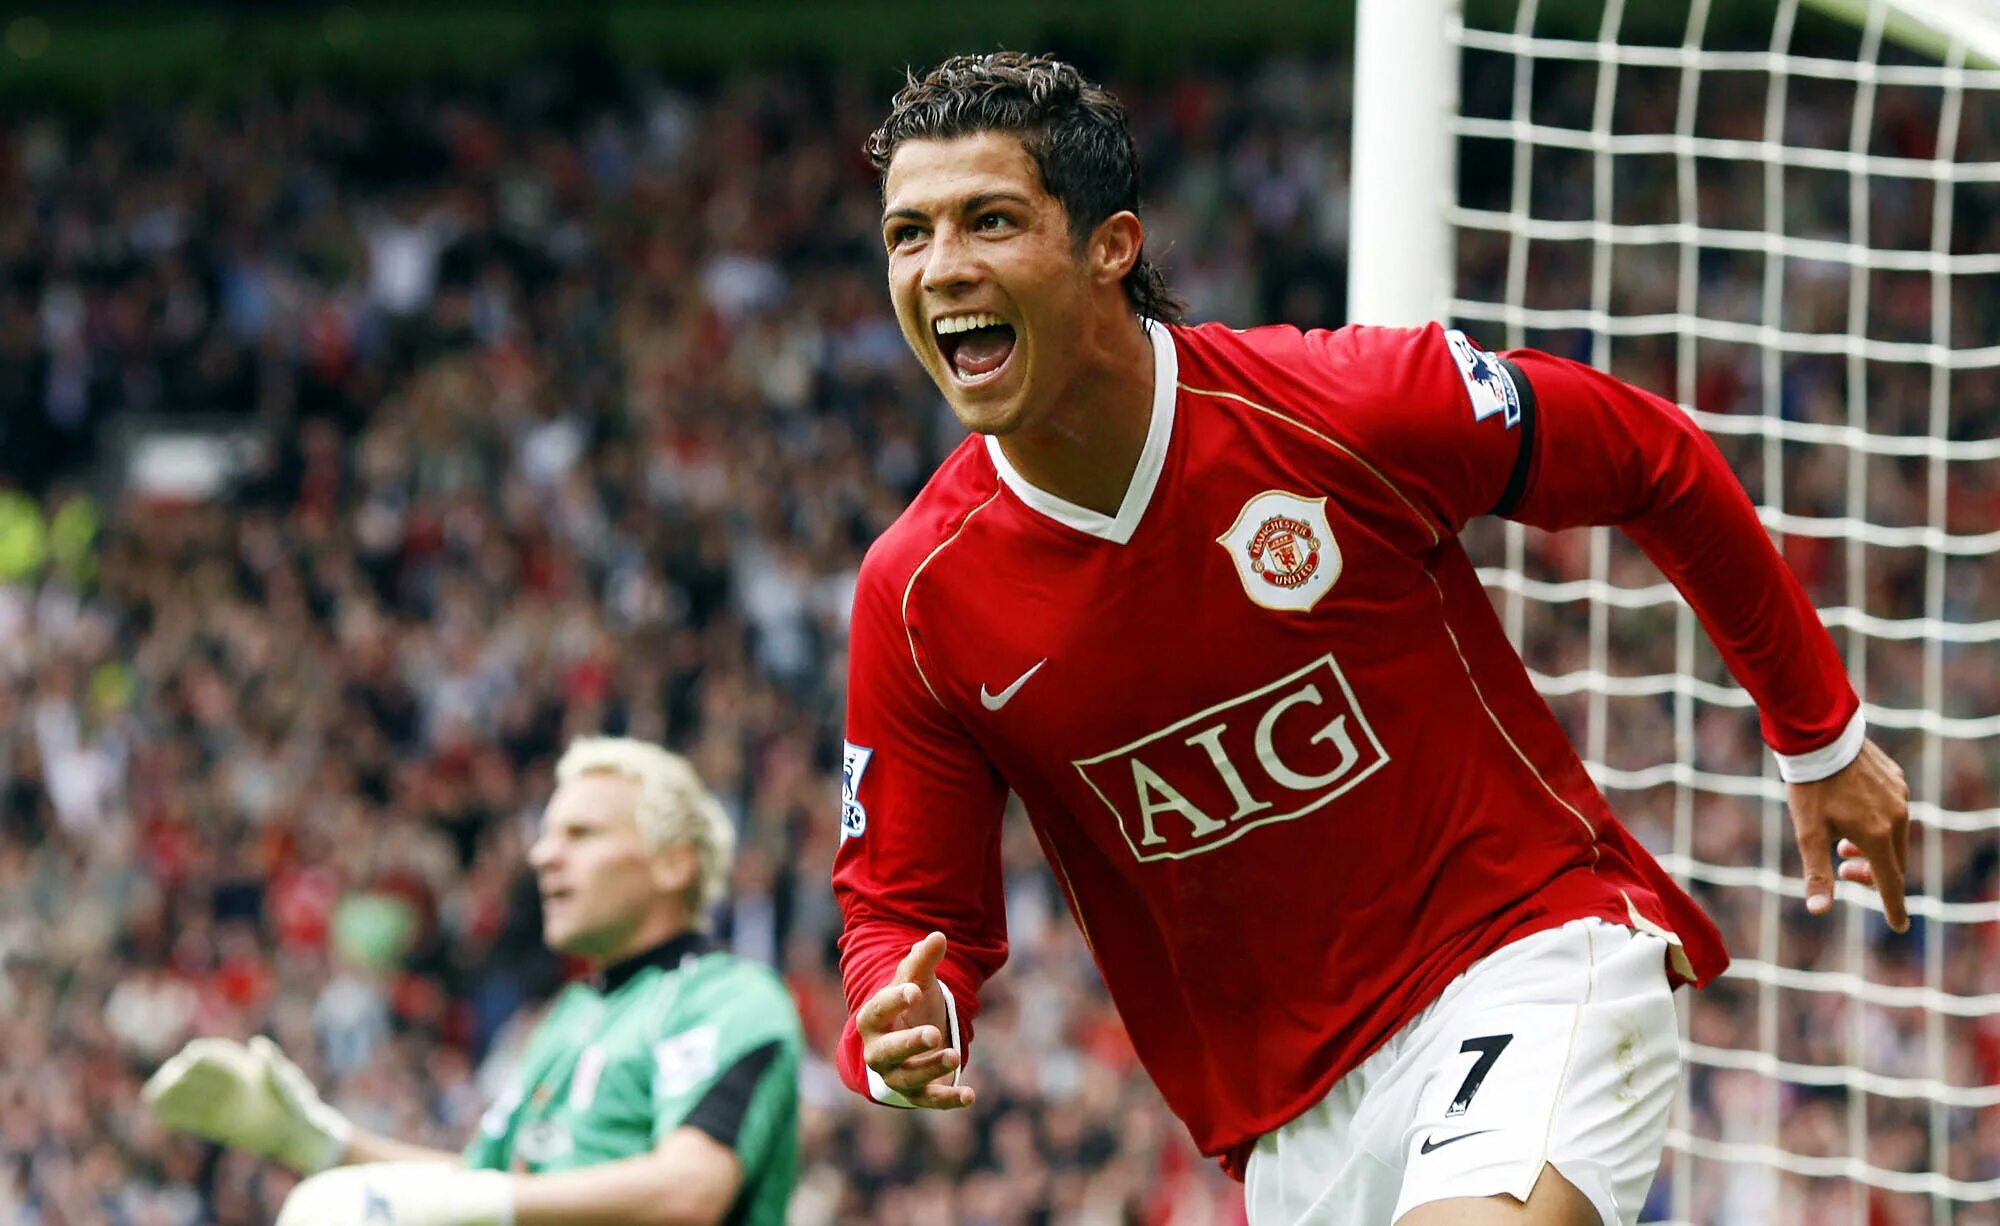 7 июля мужчина. Криштиану Роналду Манчестер Юнайтед. Роналдо Манчестер 2006. Cristiano Ronaldo Manchester United 2006.